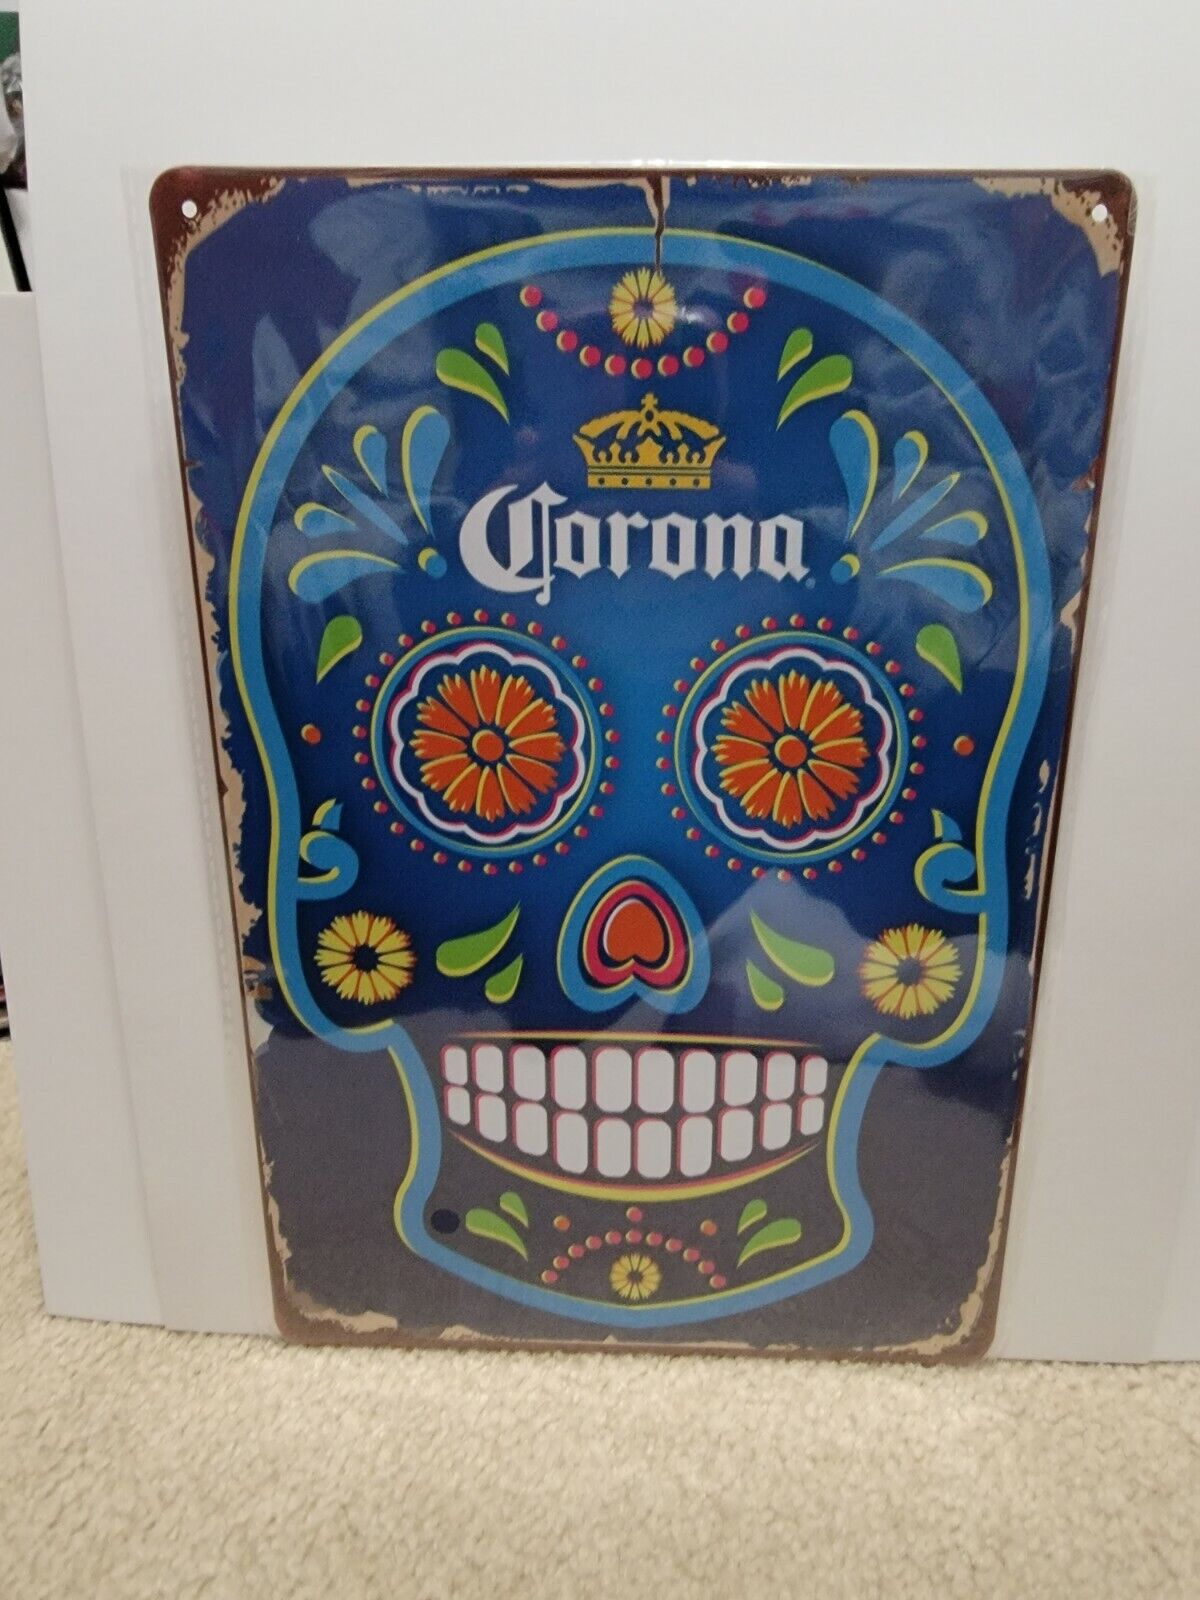 Corona Beer Sugar Skull Tin Metal Sign Tacker 8"x12" Man-cave New